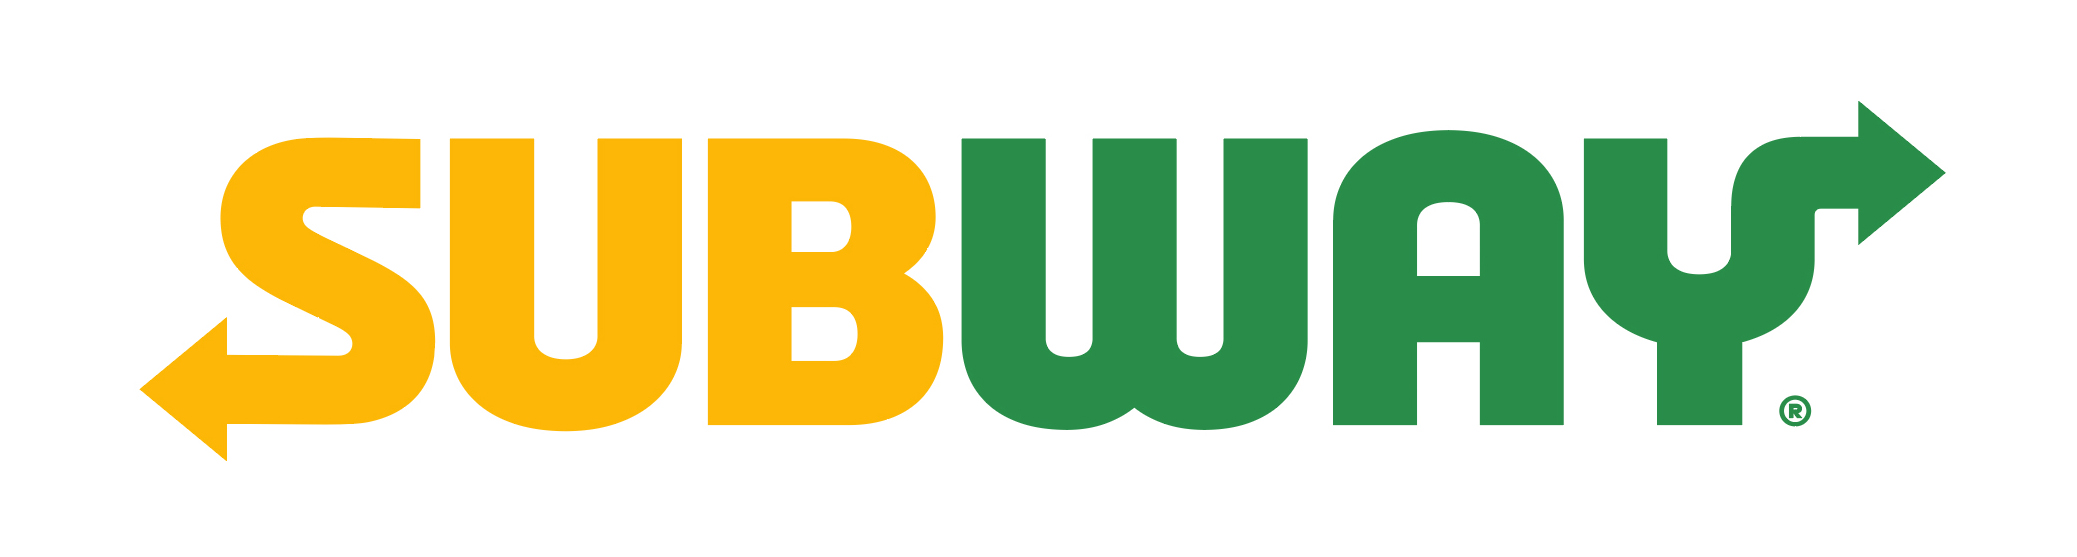 The subway logo - Sub written in yellow and way written in green.